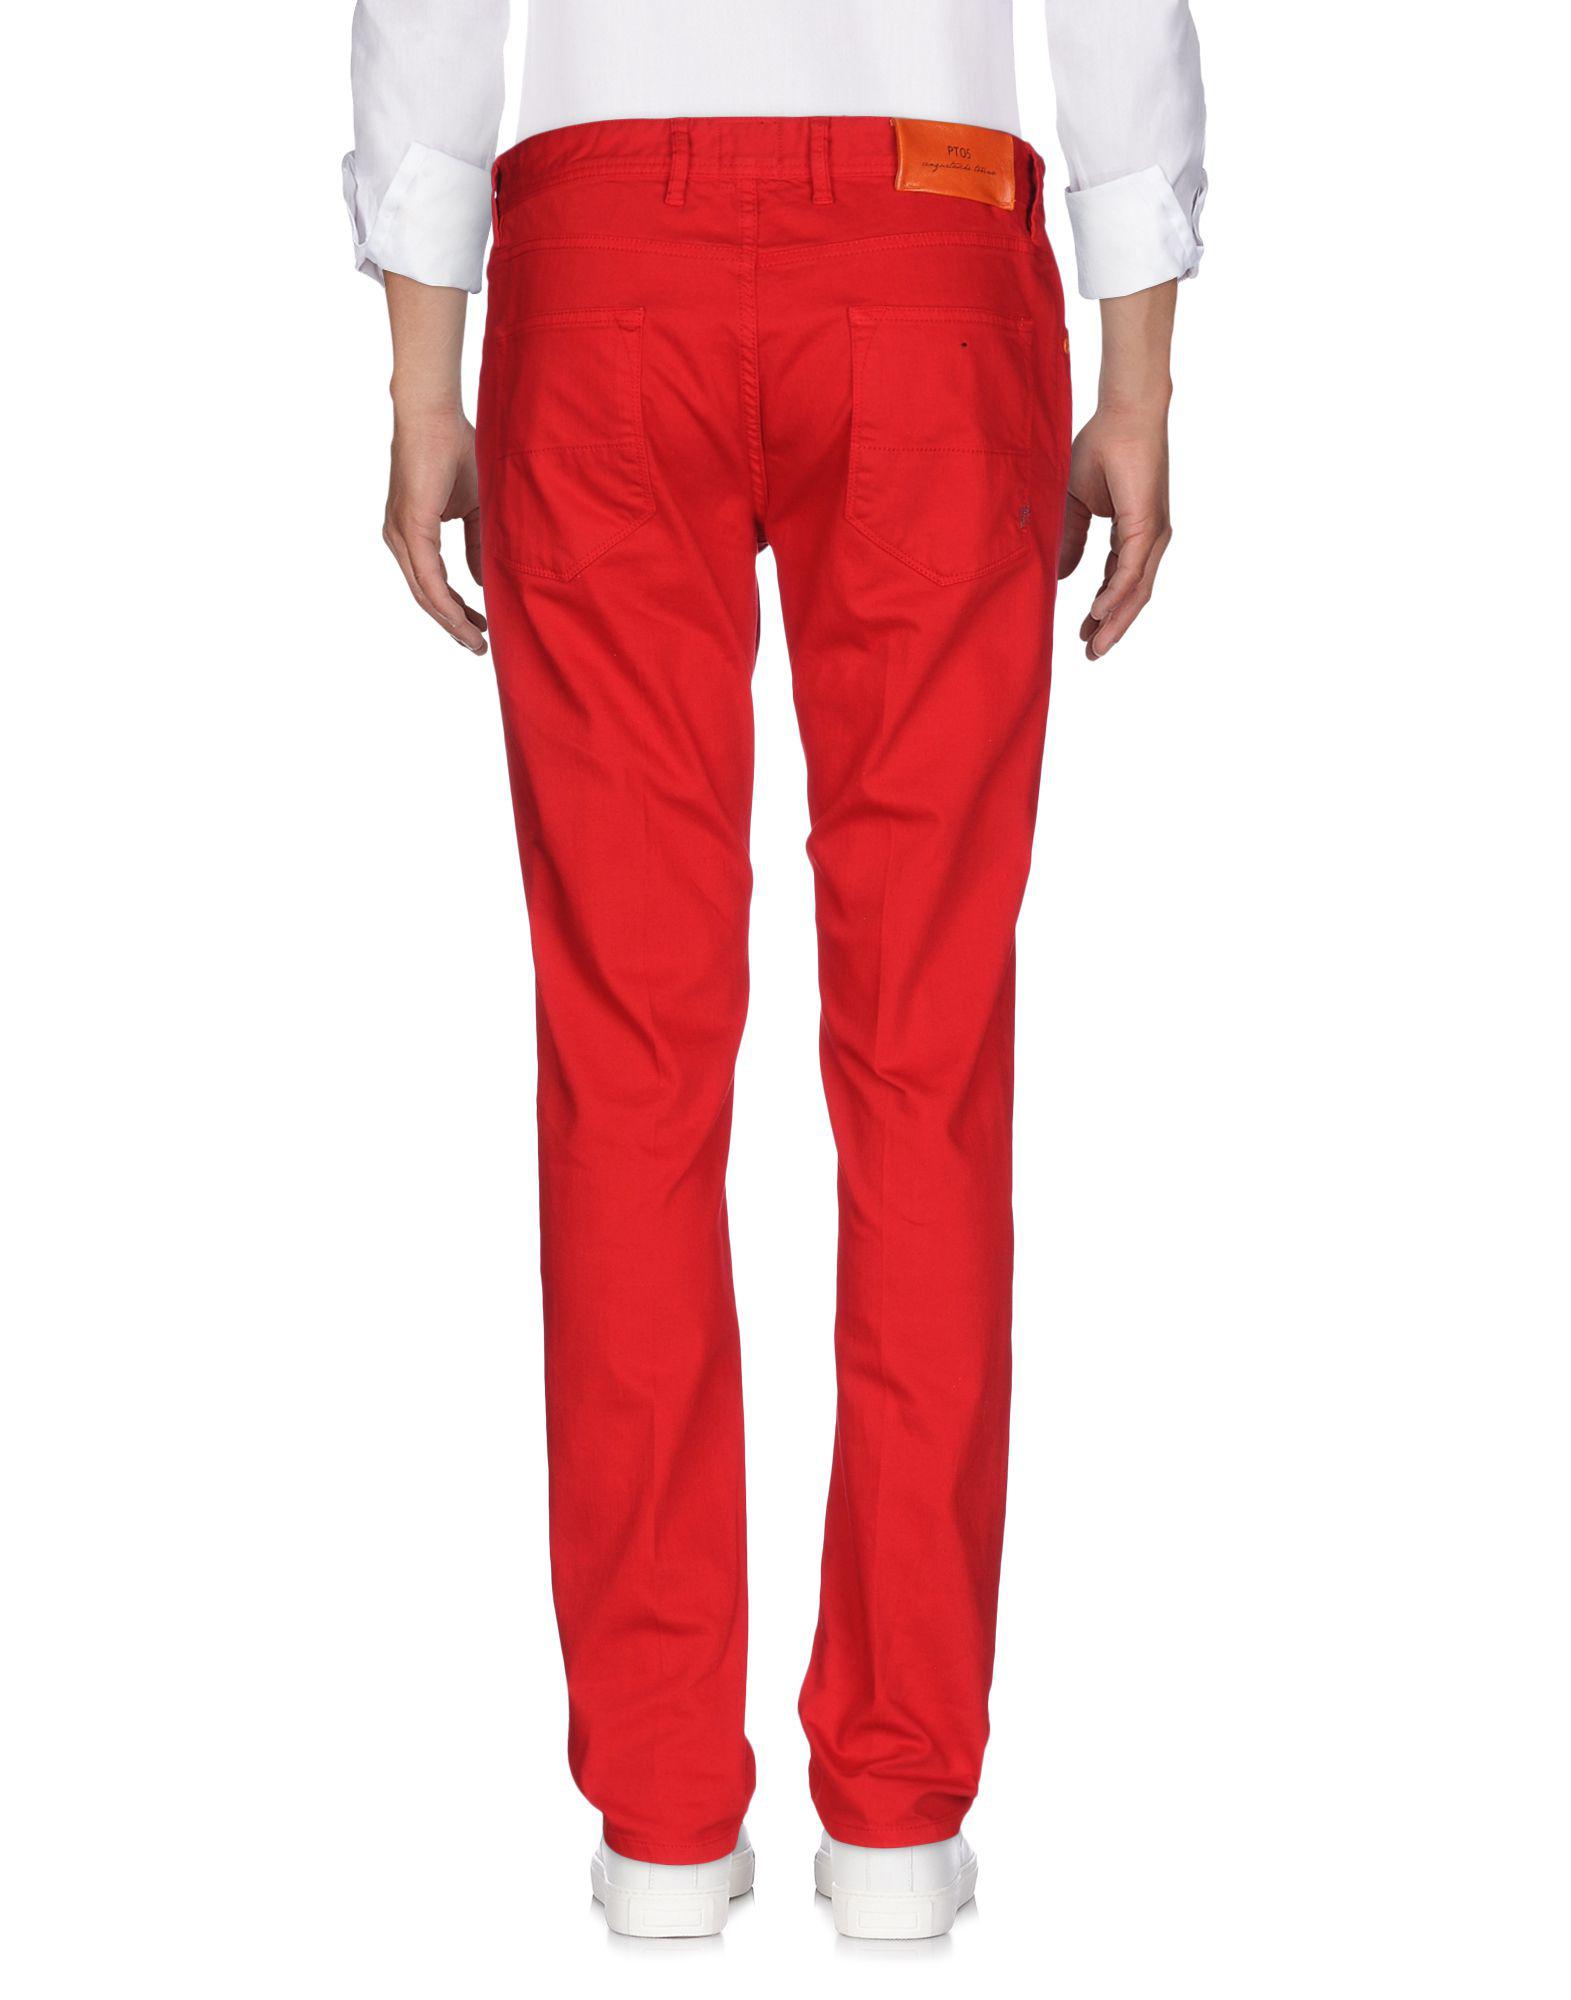 Pt05 Denim Pants in Red for Men - Lyst